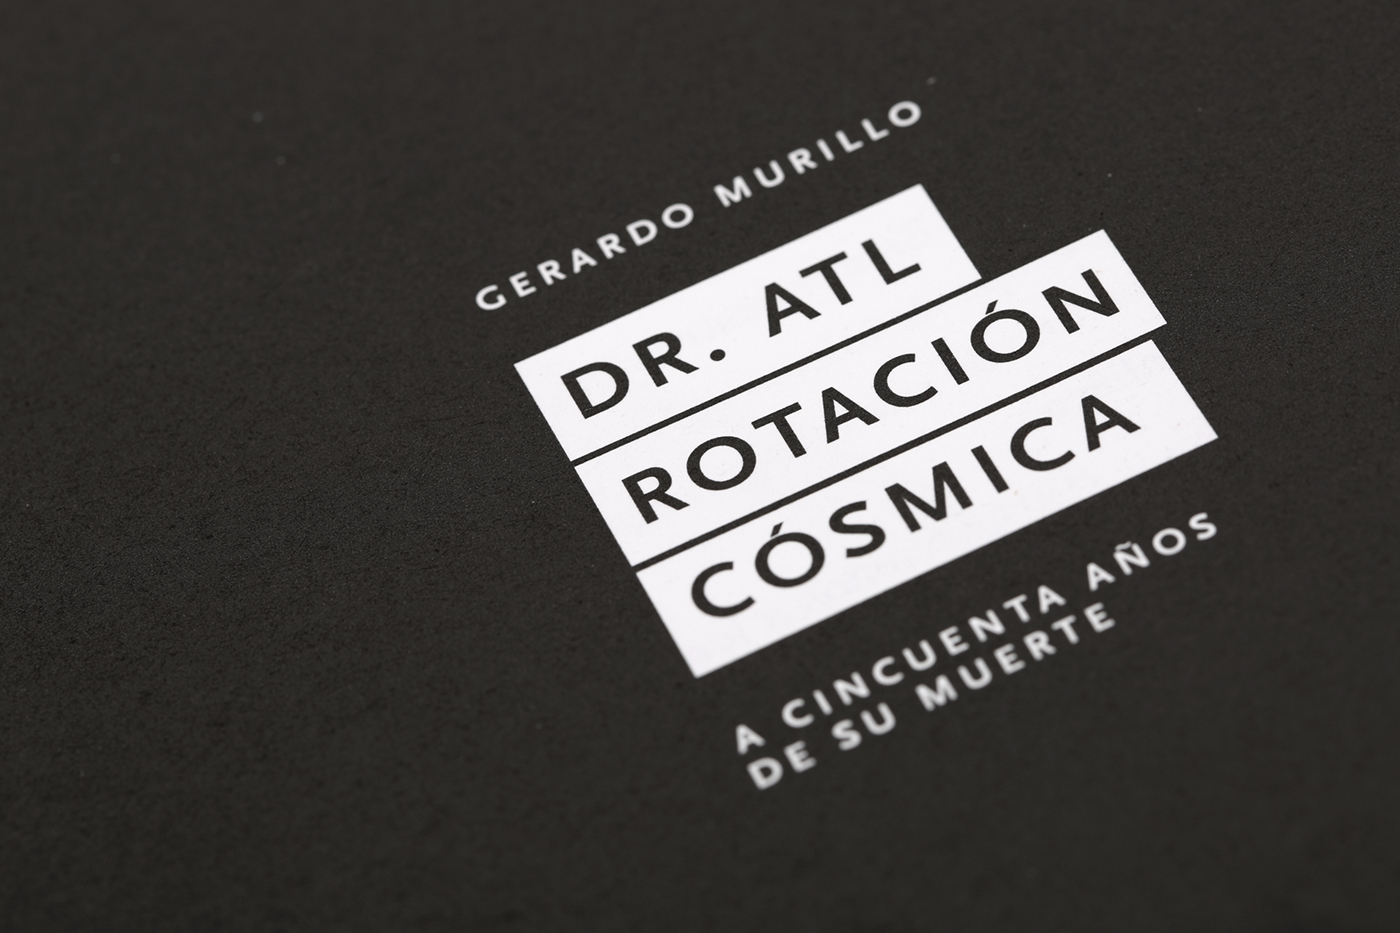 contempoaryart artbook libro print museum editorial design mexico